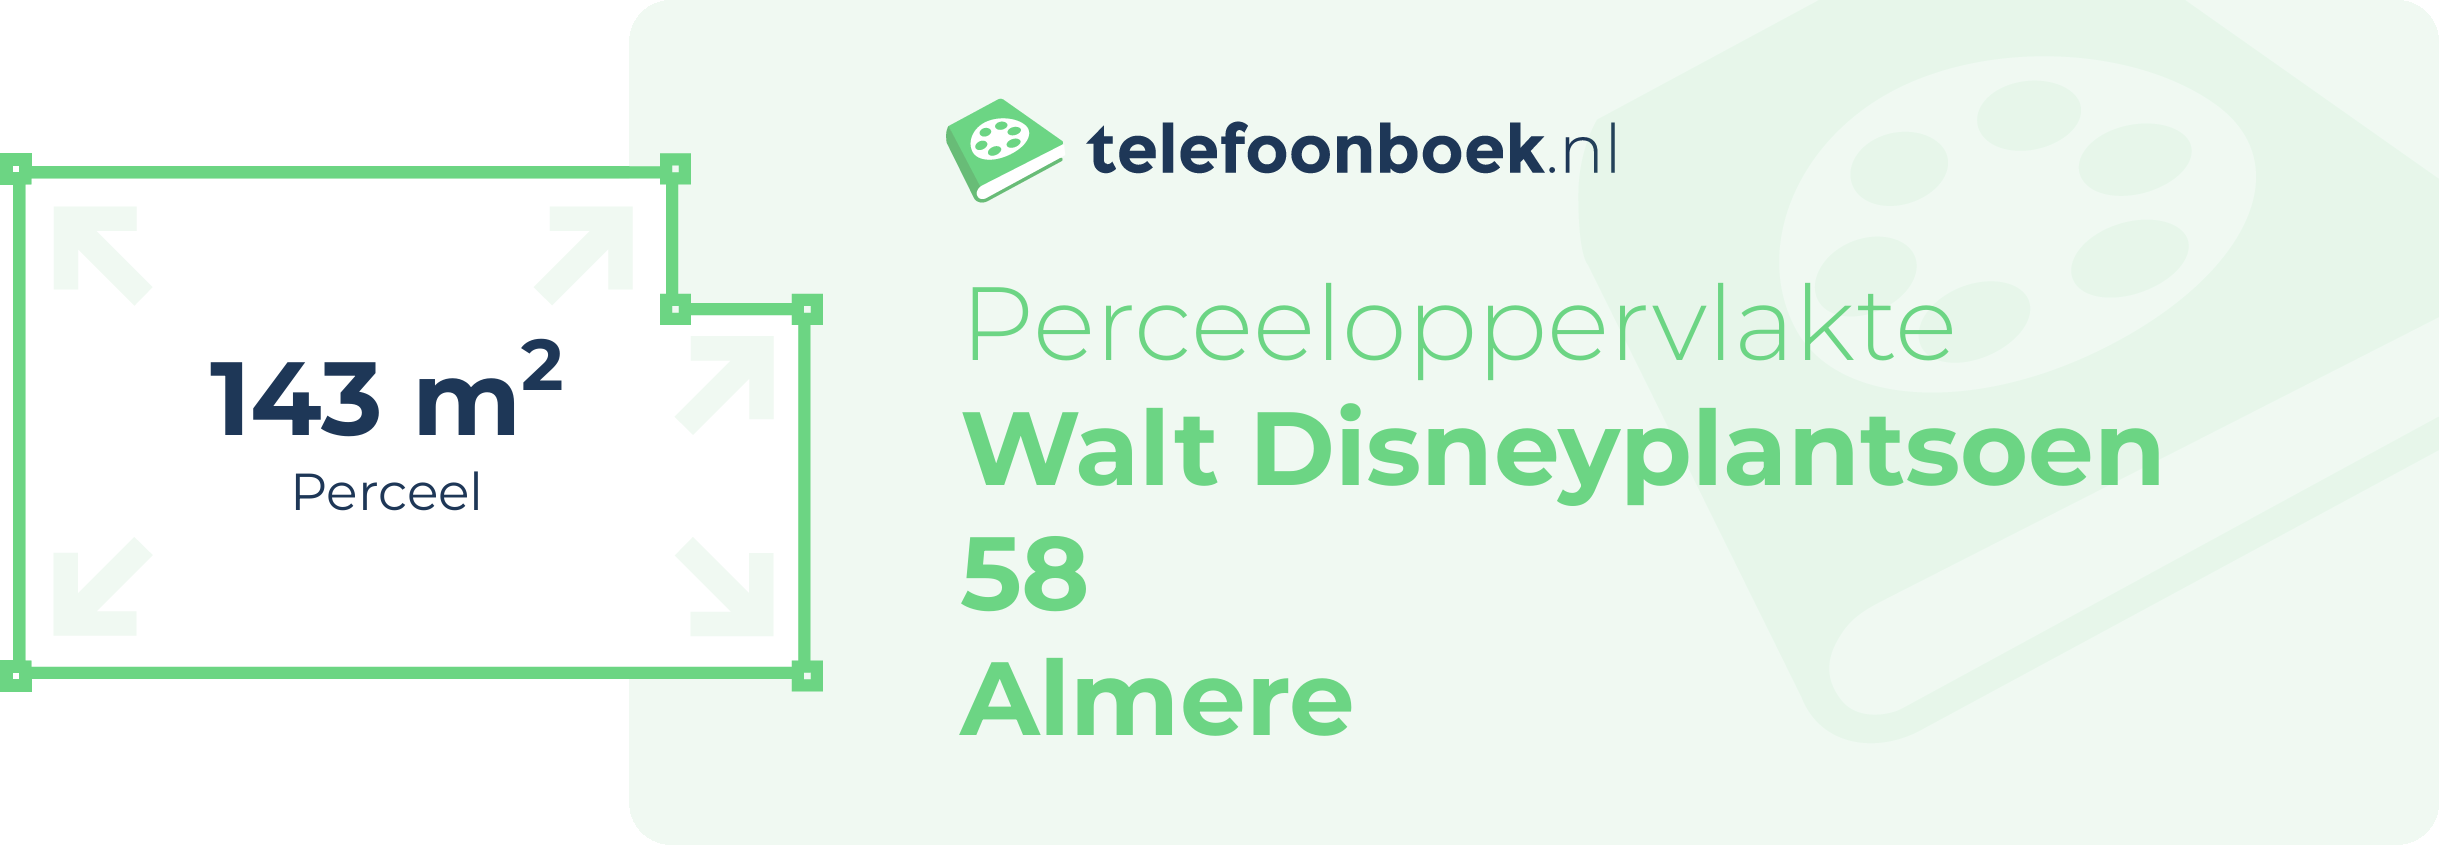 Perceeloppervlakte Walt Disneyplantsoen 58 Almere